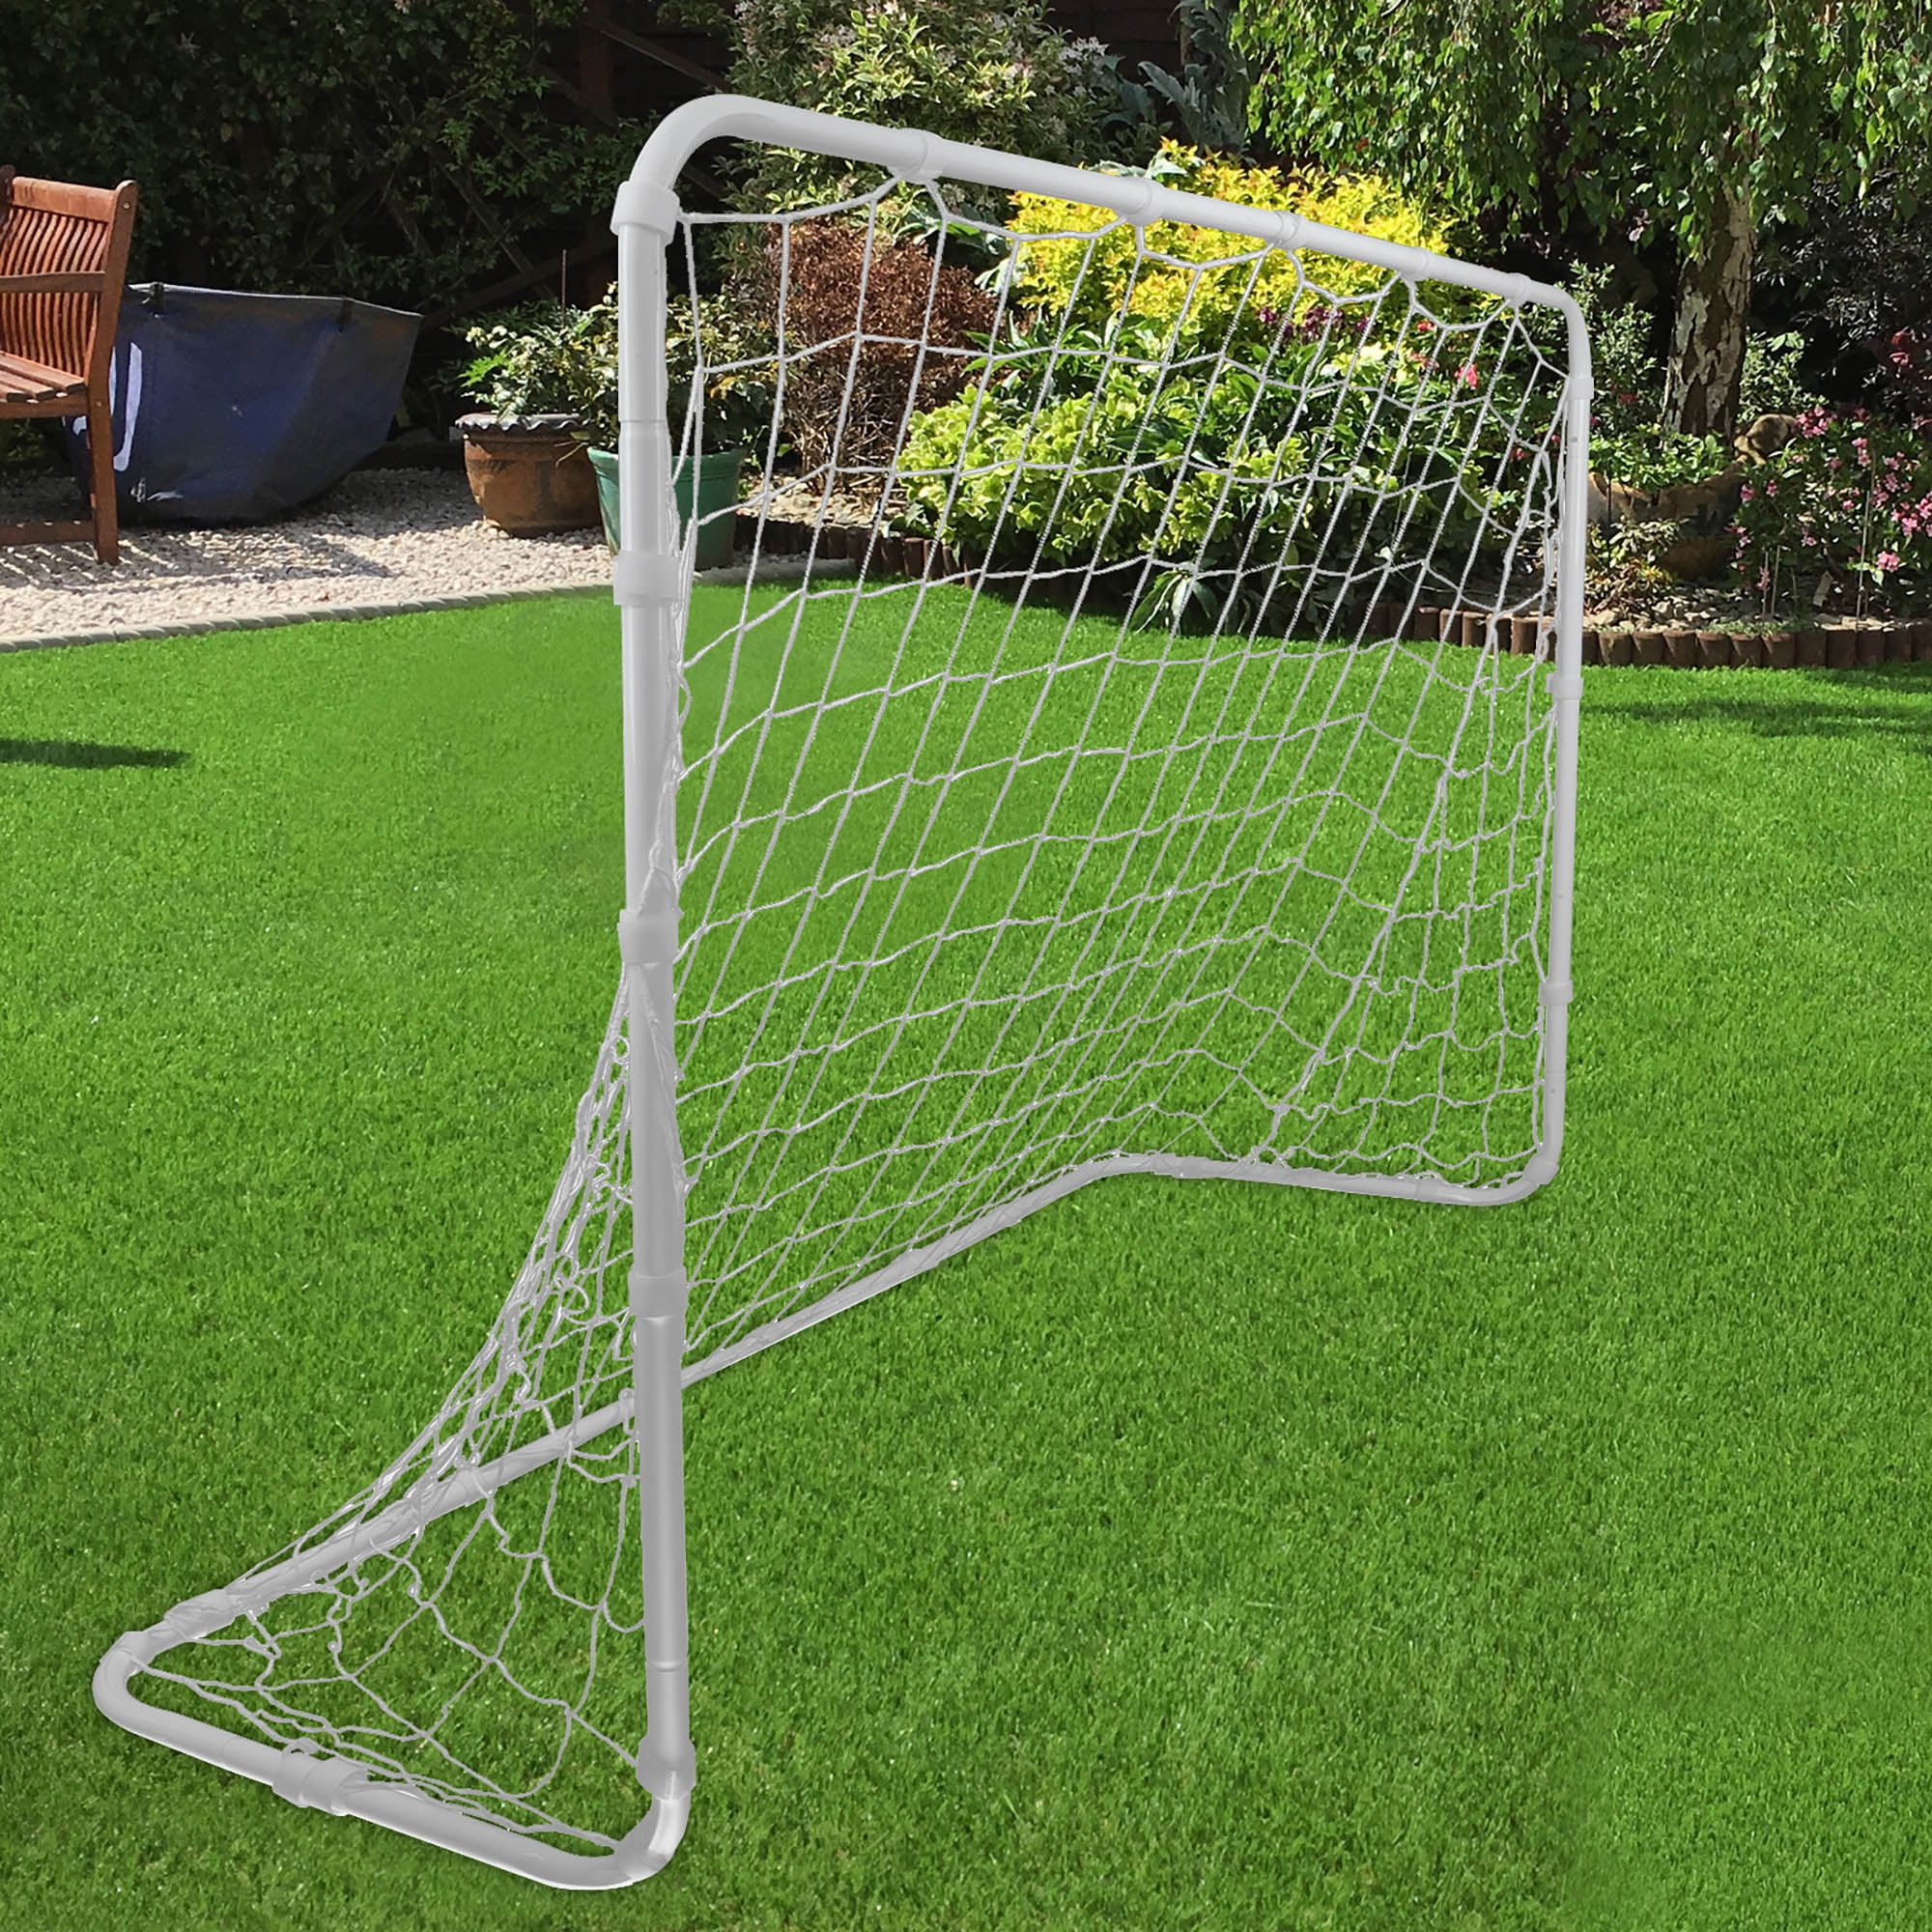 4ft Football Soccer Goal Post Net For Kids Outdoor Football Match Training-PL 